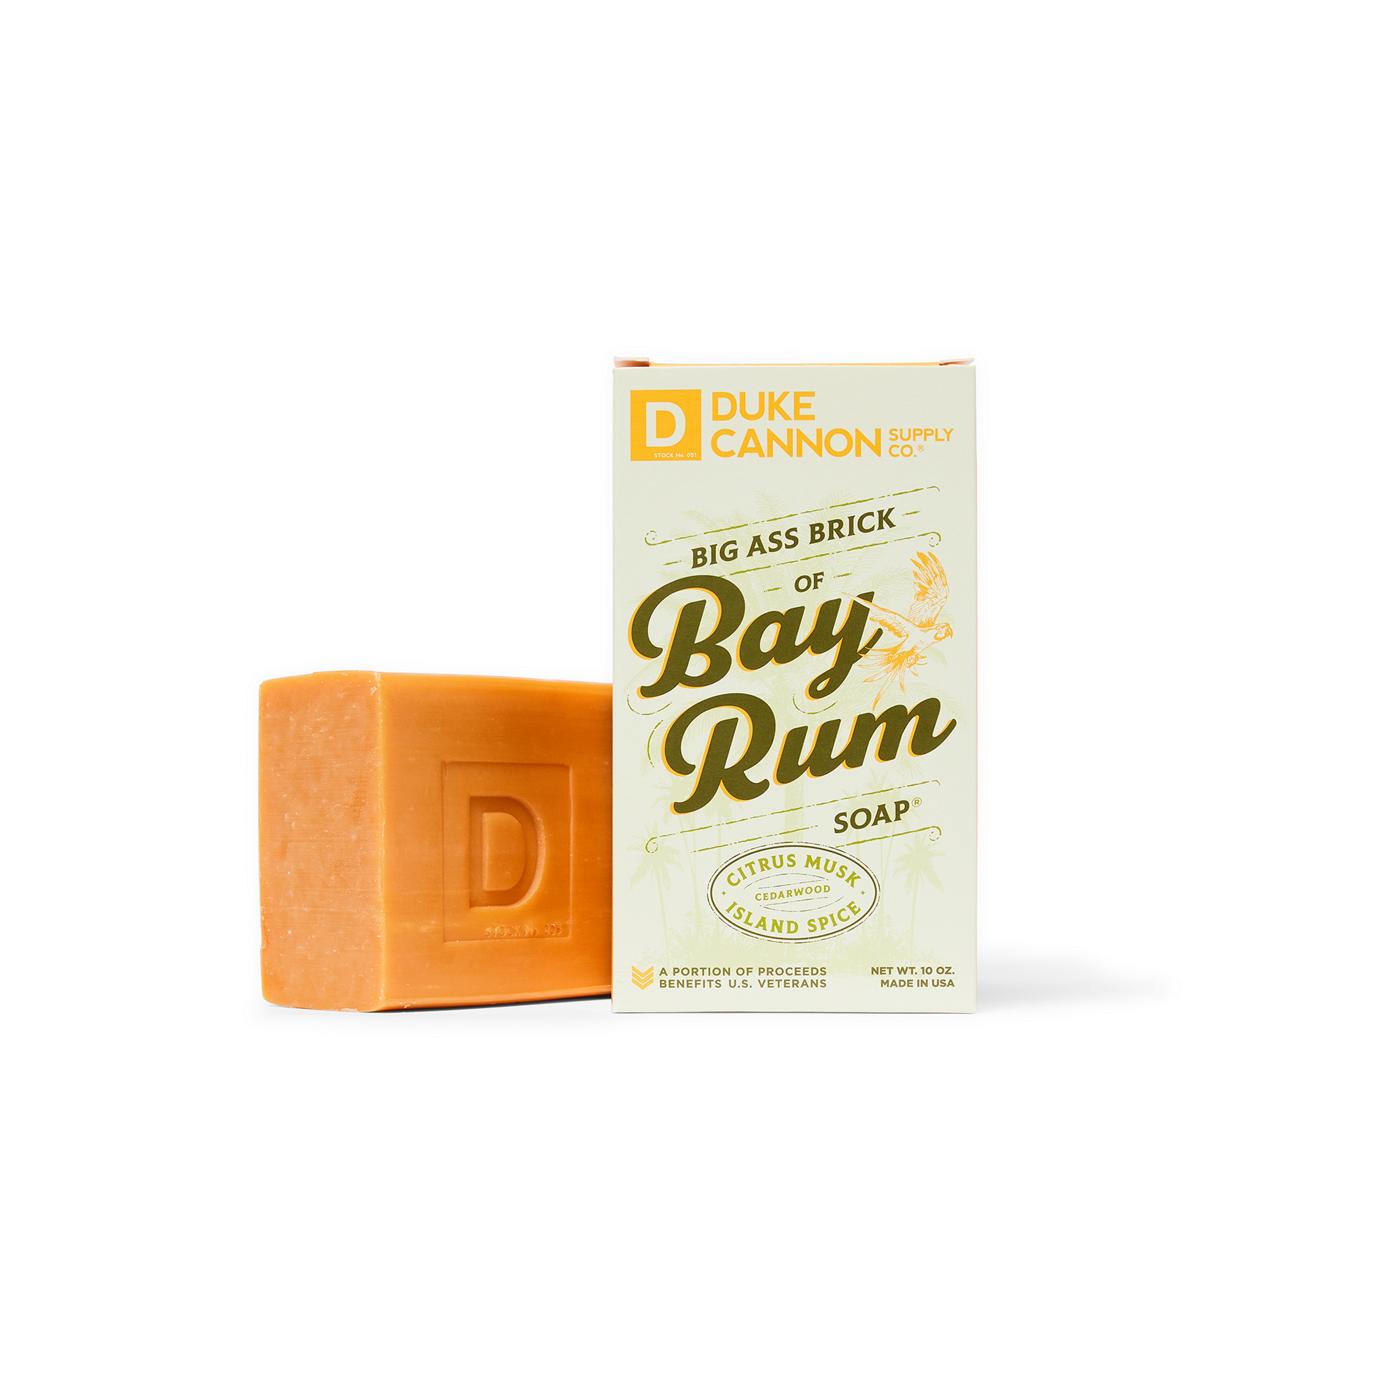 Duke Cannon Bay Rum Bar Soap; image 6 of 6